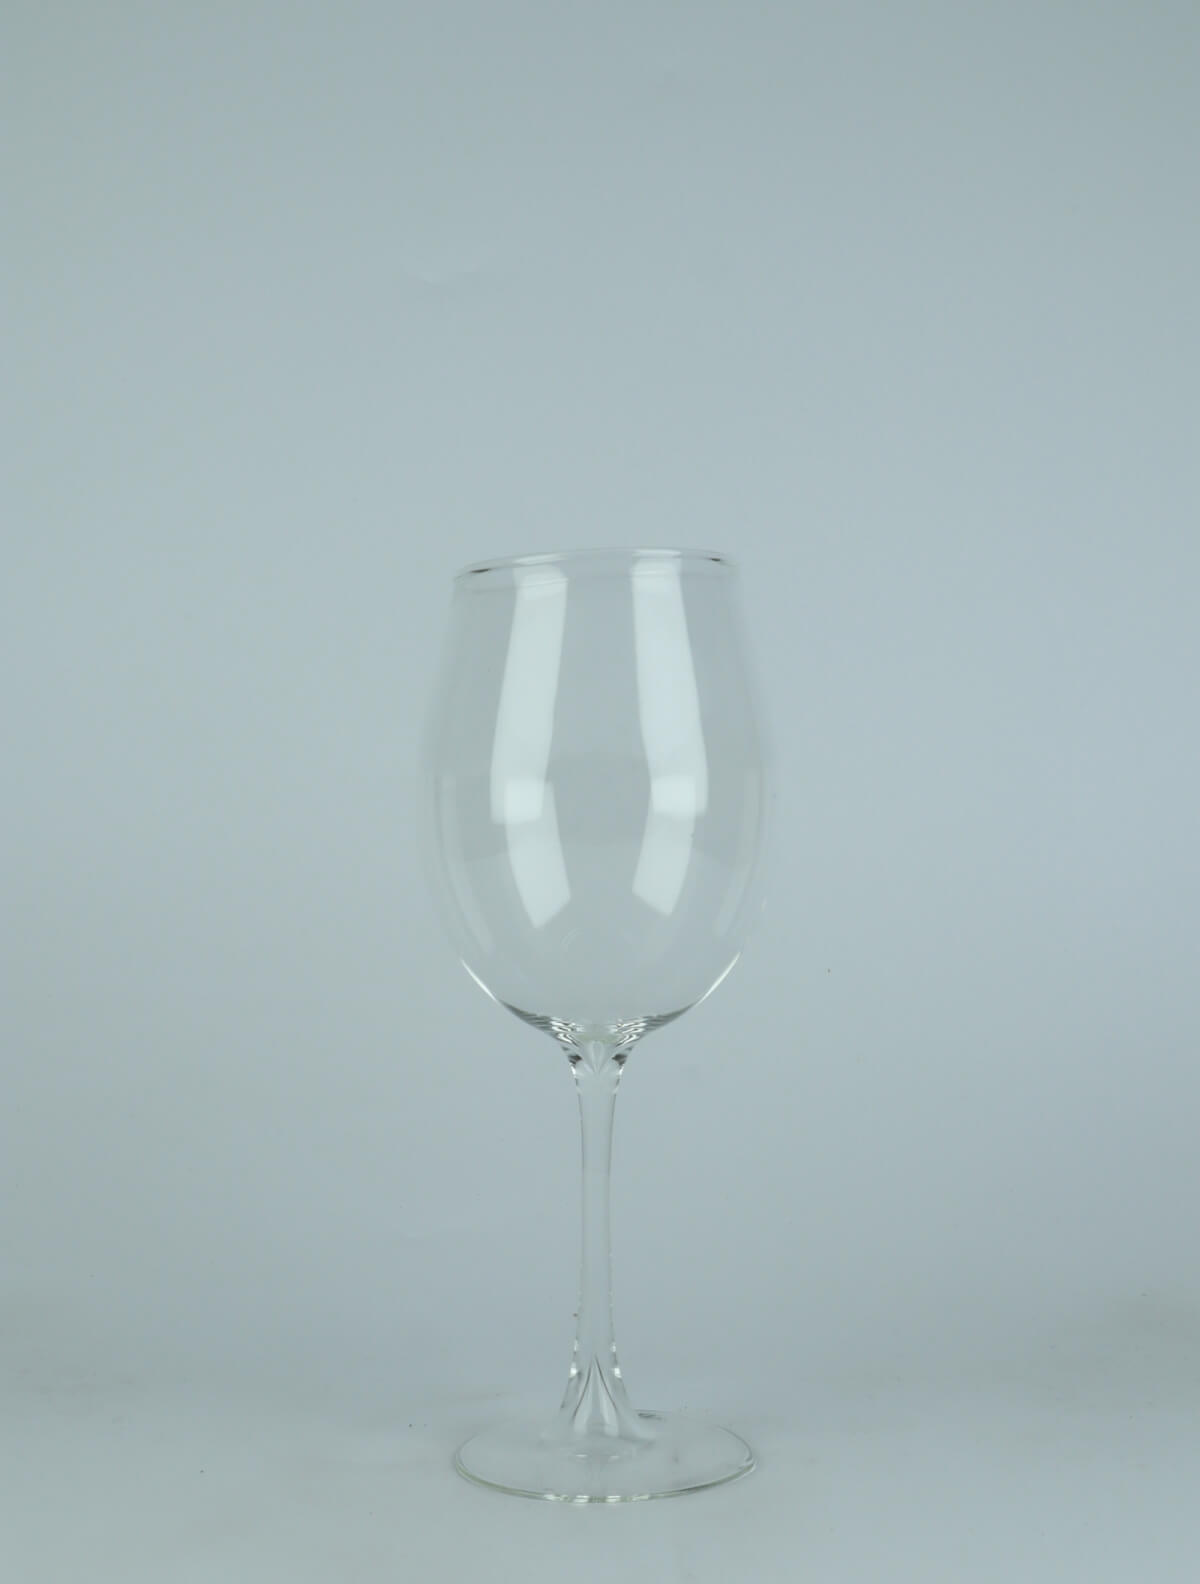 A bottle  Zünd vinglas - 22-23 cm høj, diameter 10 cm, 95 gram Wine glasses from Glasbläserei Zünd, Bern in Switzerland